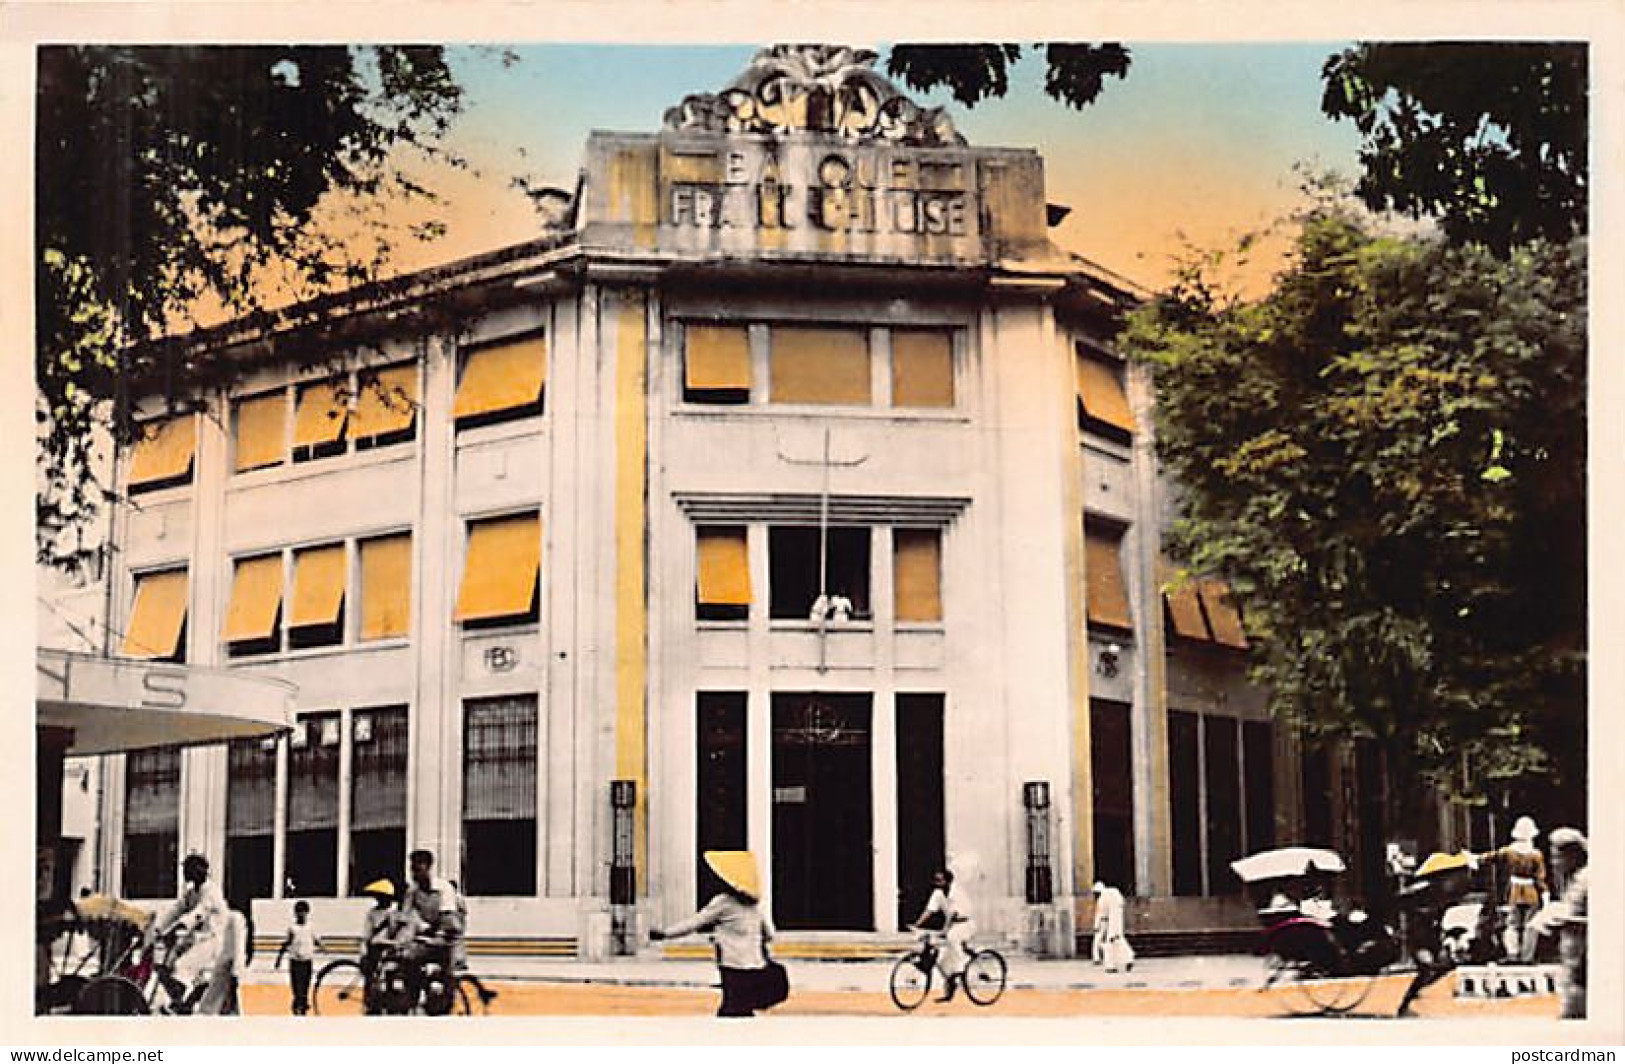 Vietnam - HANOI - Banque Franco-Chinoise - Ed. P-C Paris 279 - Viêt-Nam